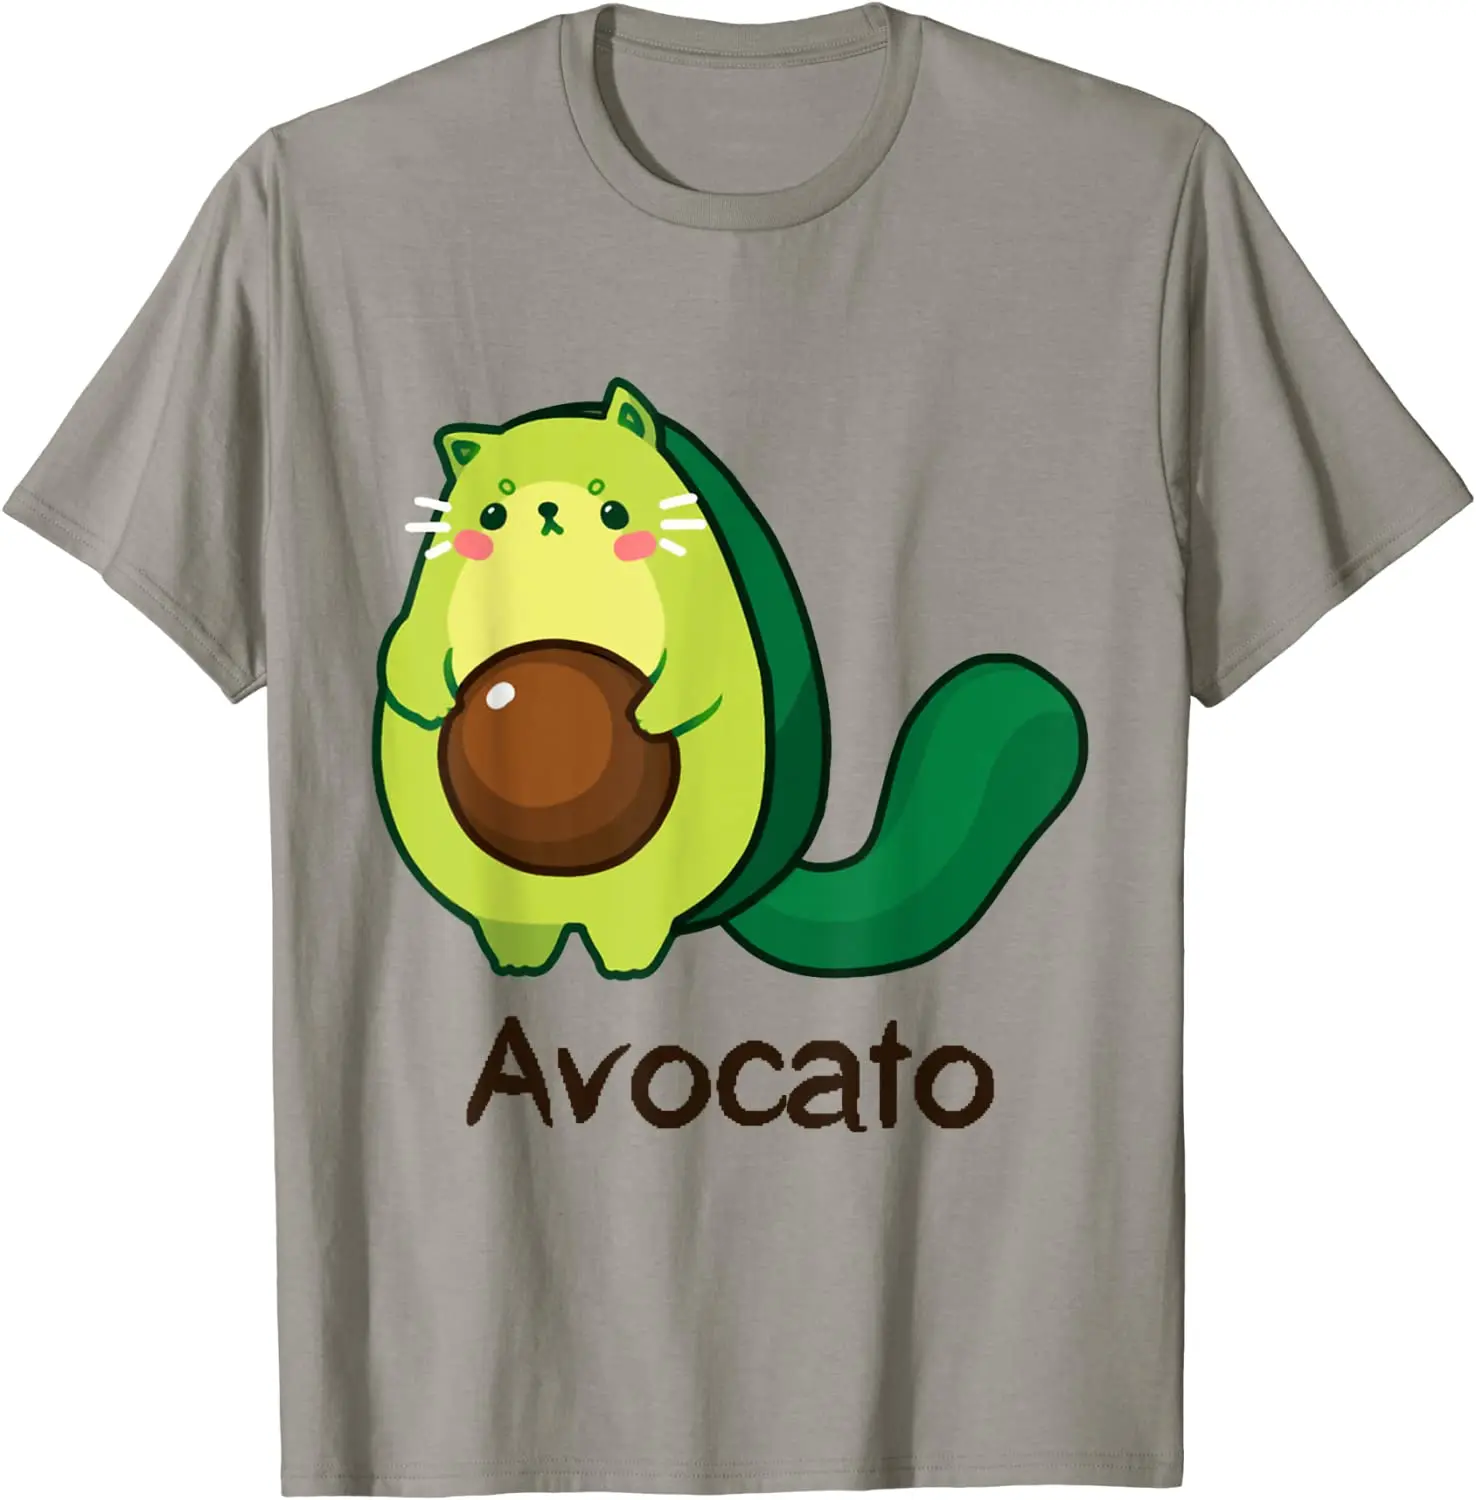 

Avocato Avocado Cat Avogato Kitten Kitty Whiskers Cute Funny T-Shirt comfortable T Shirt Fashion Tops Shirts Cotton Men Gift